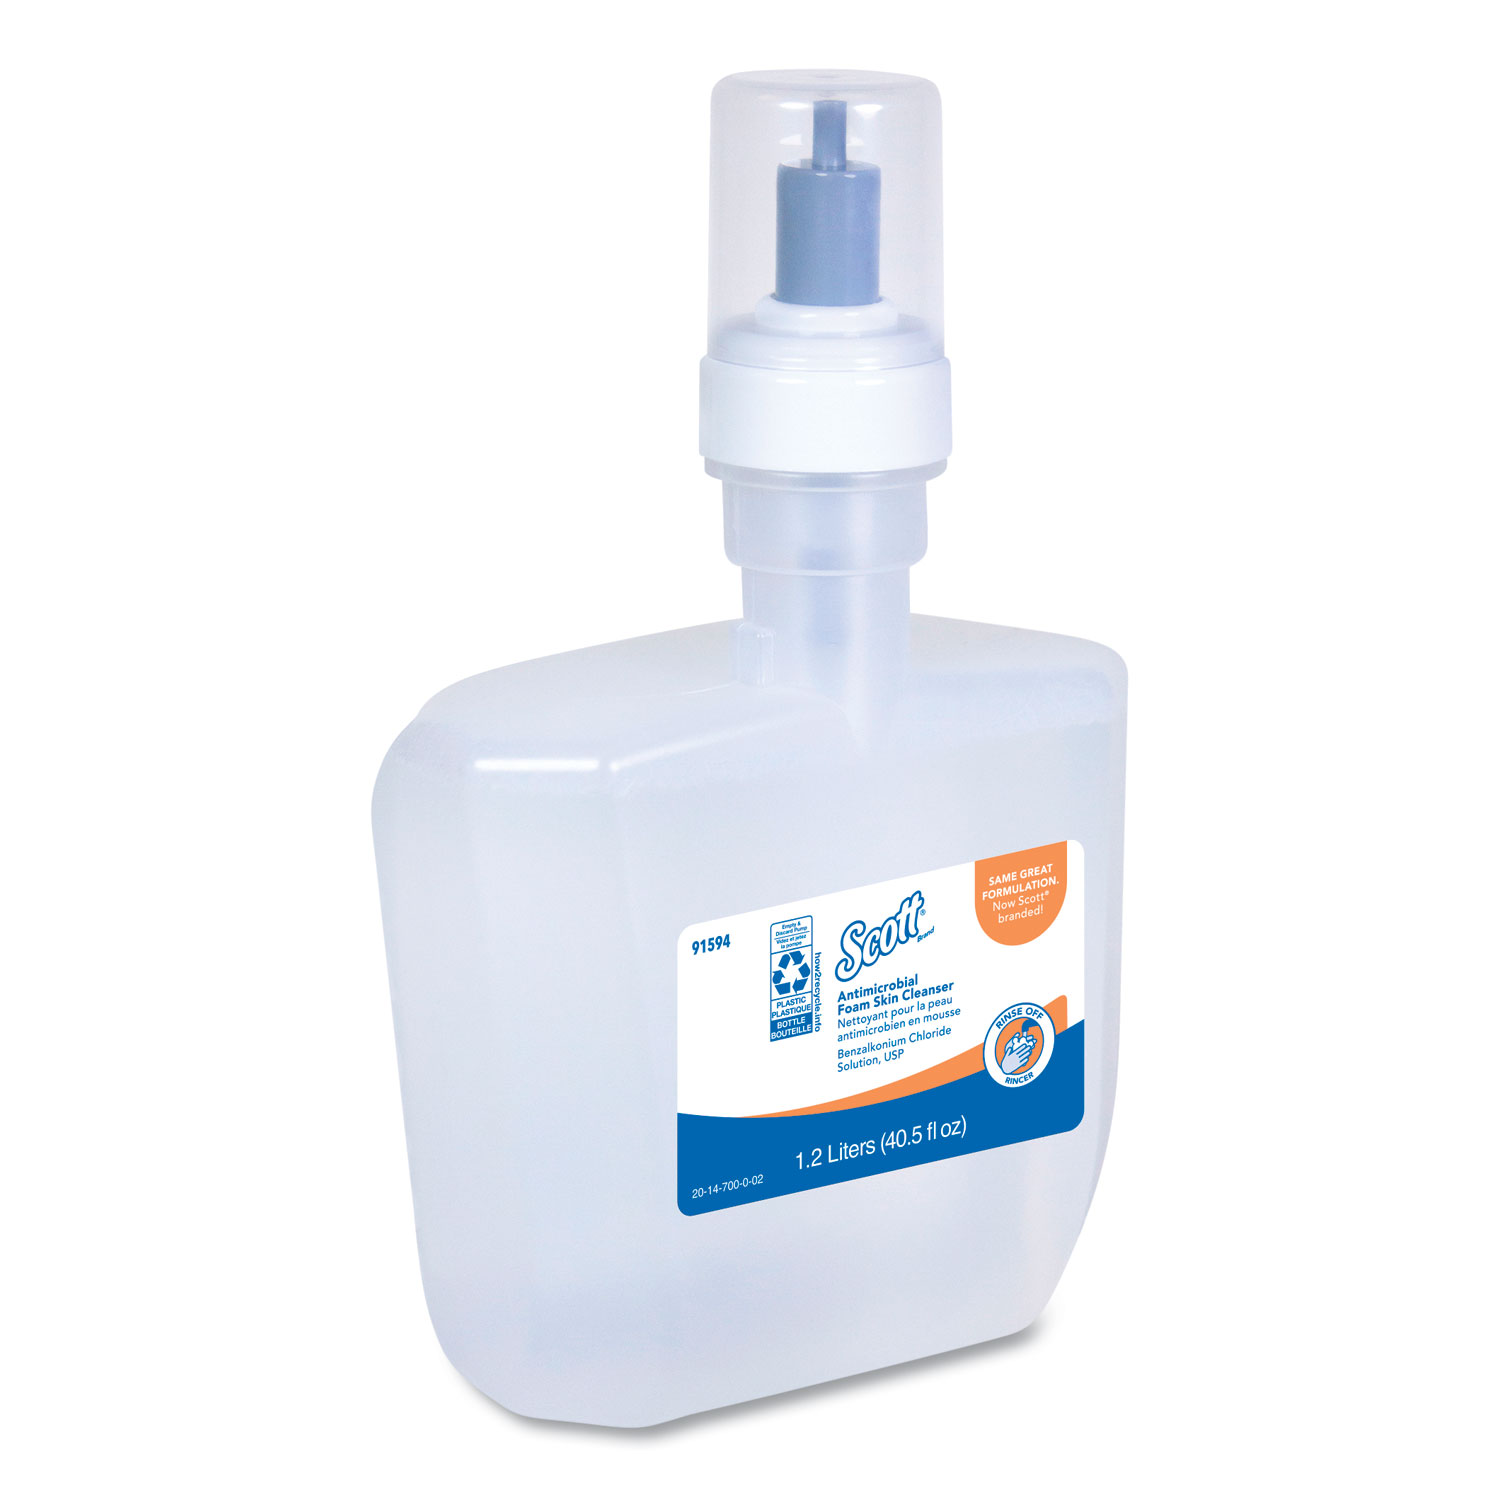  Scott 91594 Control Antimicrobial Foam Skin Cleanser, Fresh Scent, 1200 mL, 2/Carton (KCC91594) 